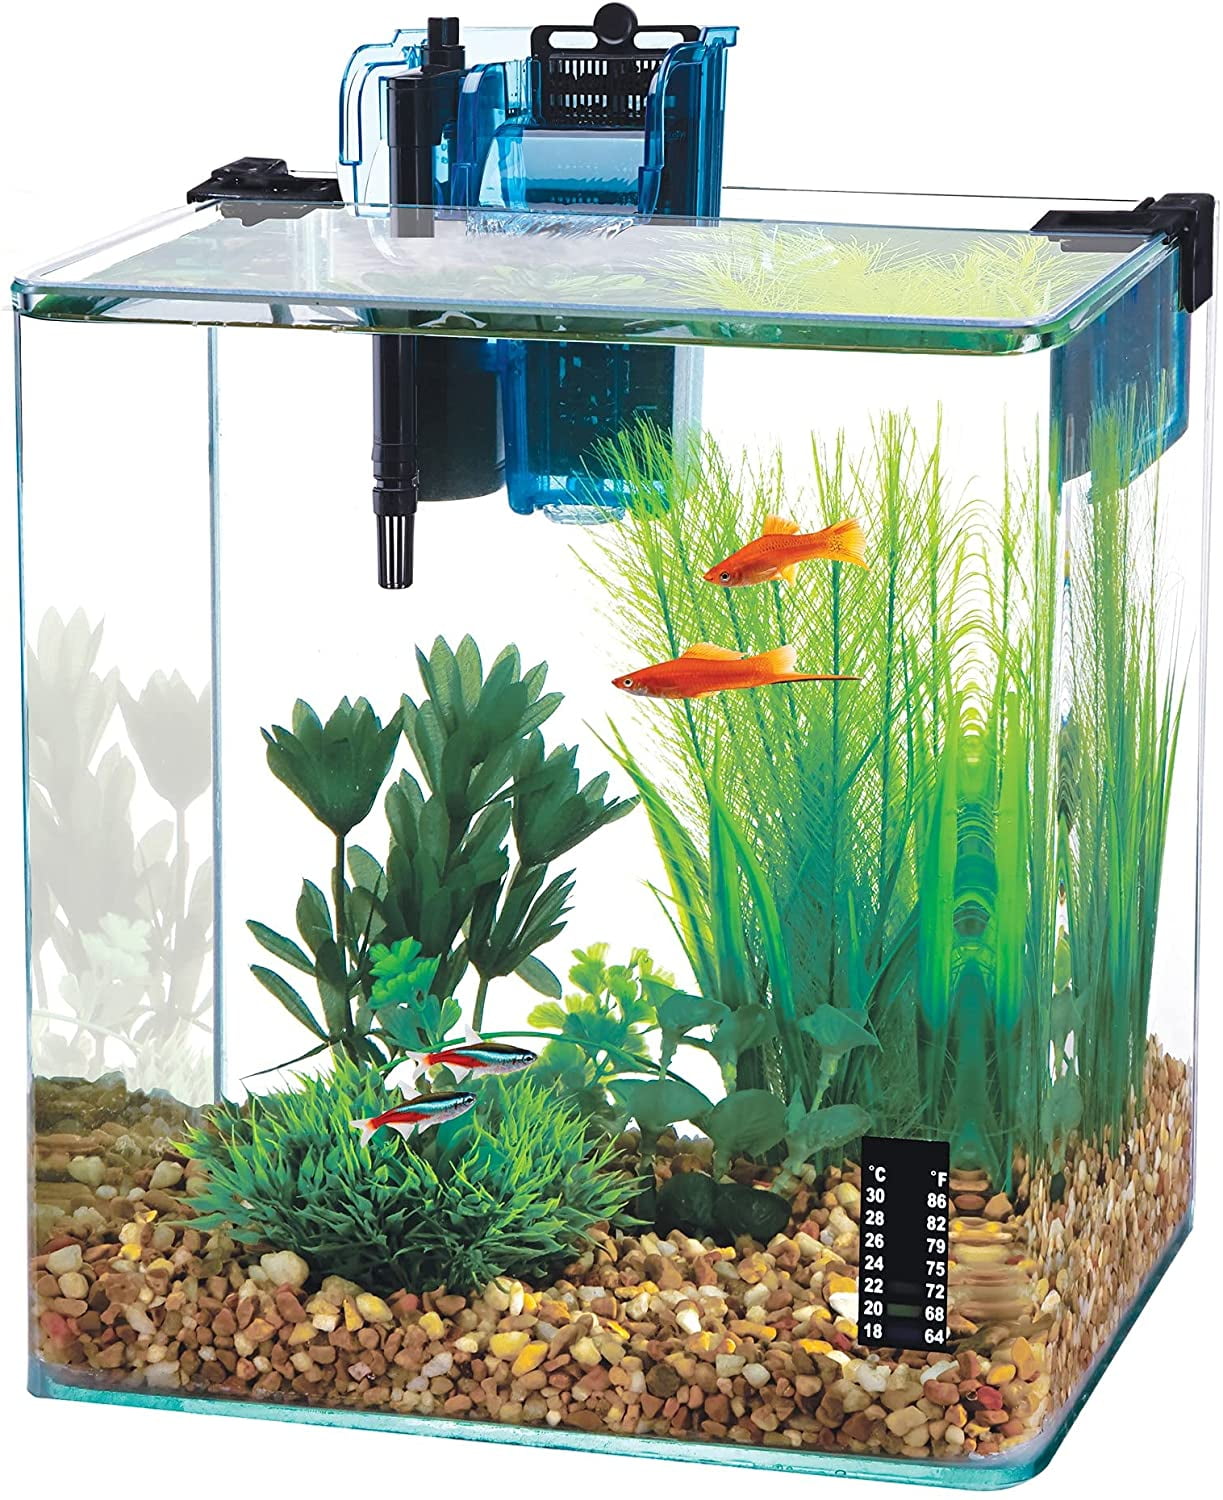 Penn-Plax Water-World Vertex Desktop Aquarium Kit - 10 Gallon Tank